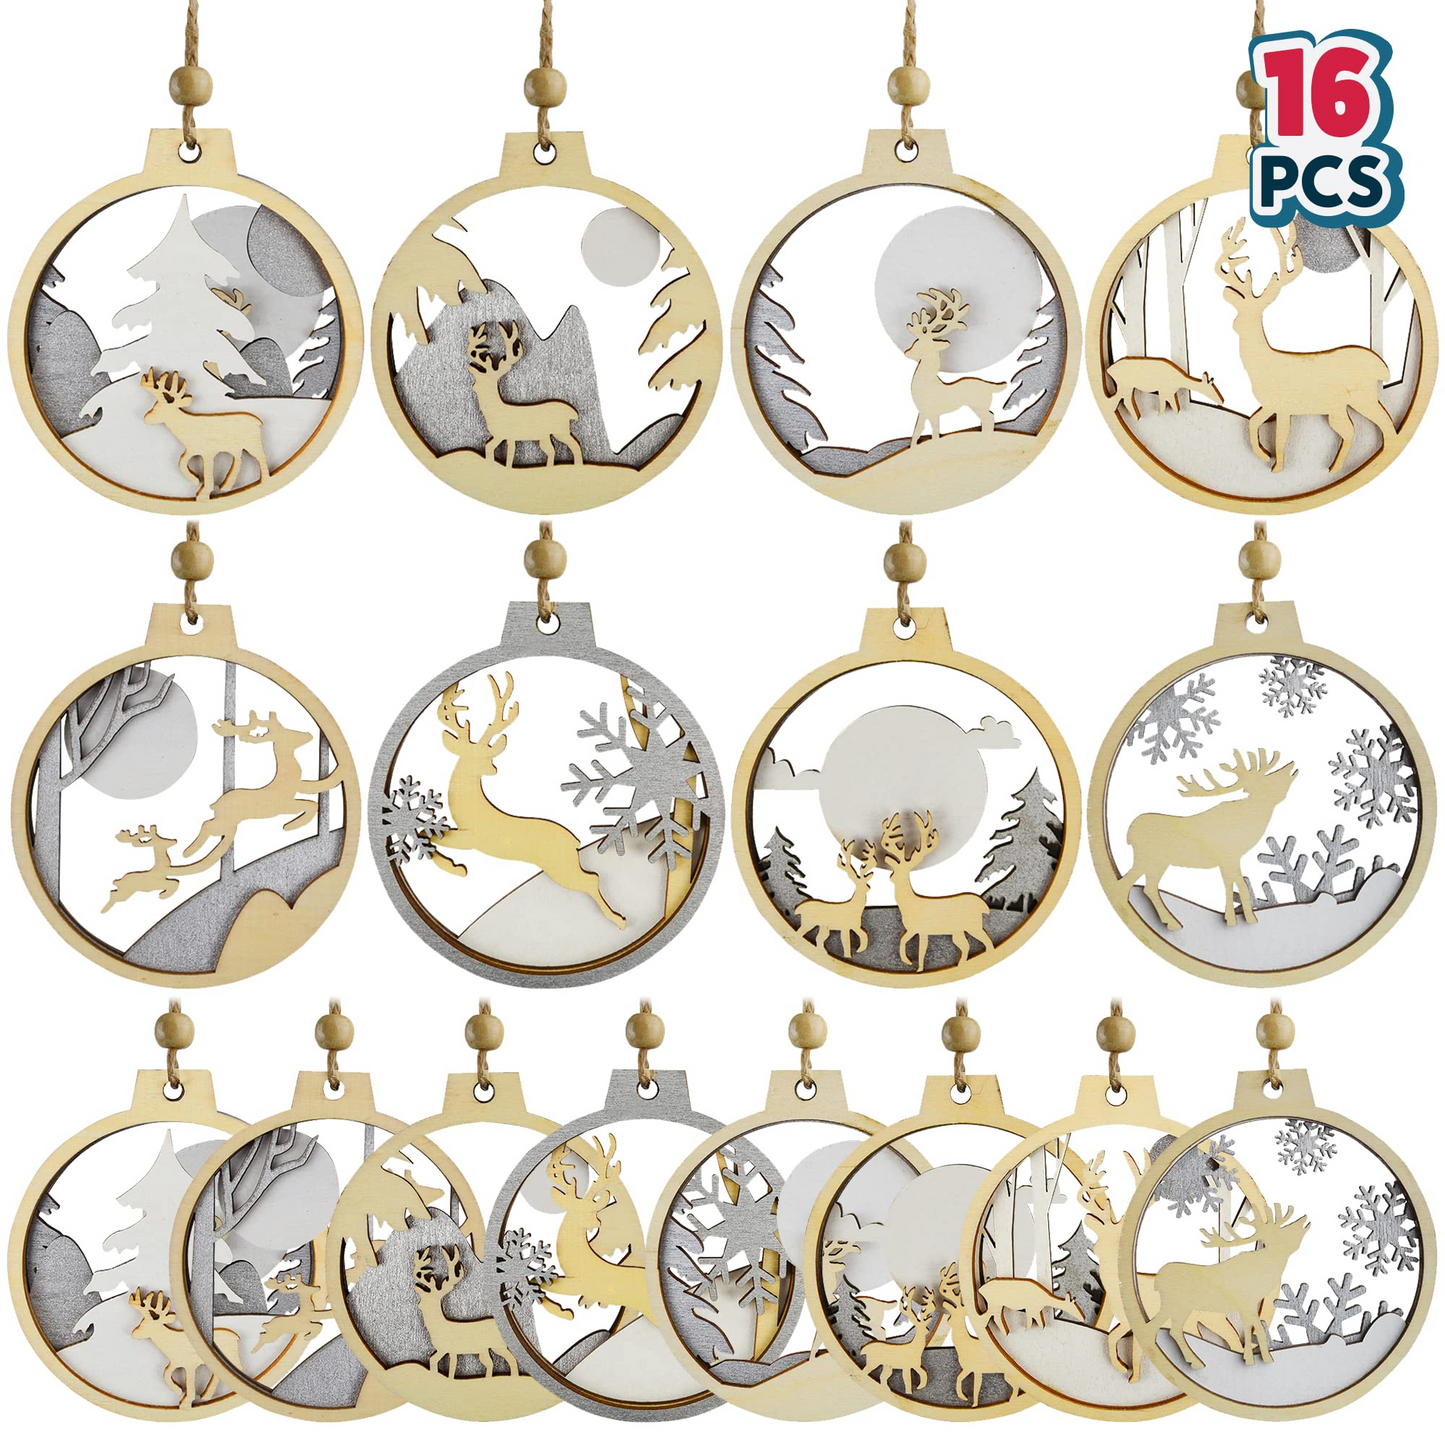 16 pcs Christmas Wooden Ornaments